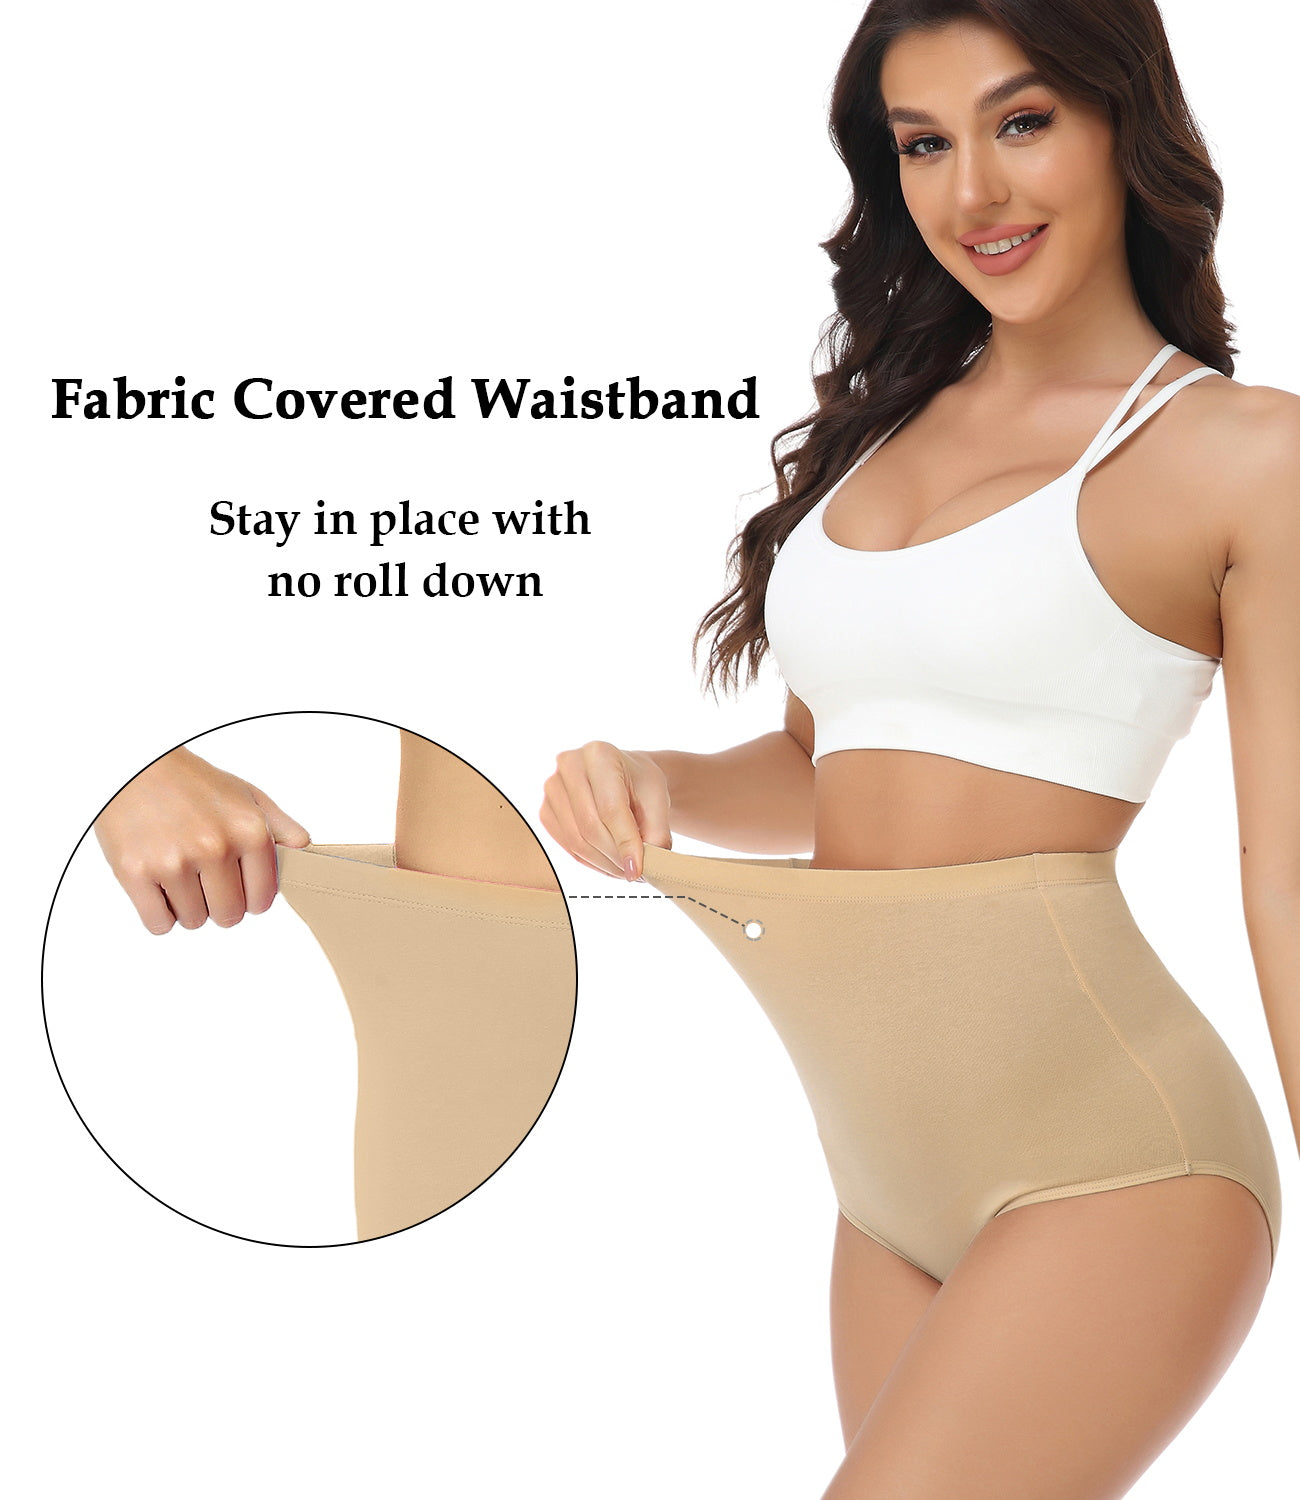 wirarpa Women's Underwear Cotton Super High Waisted Briefs Stretch Full Coverage Panties 4 Pack